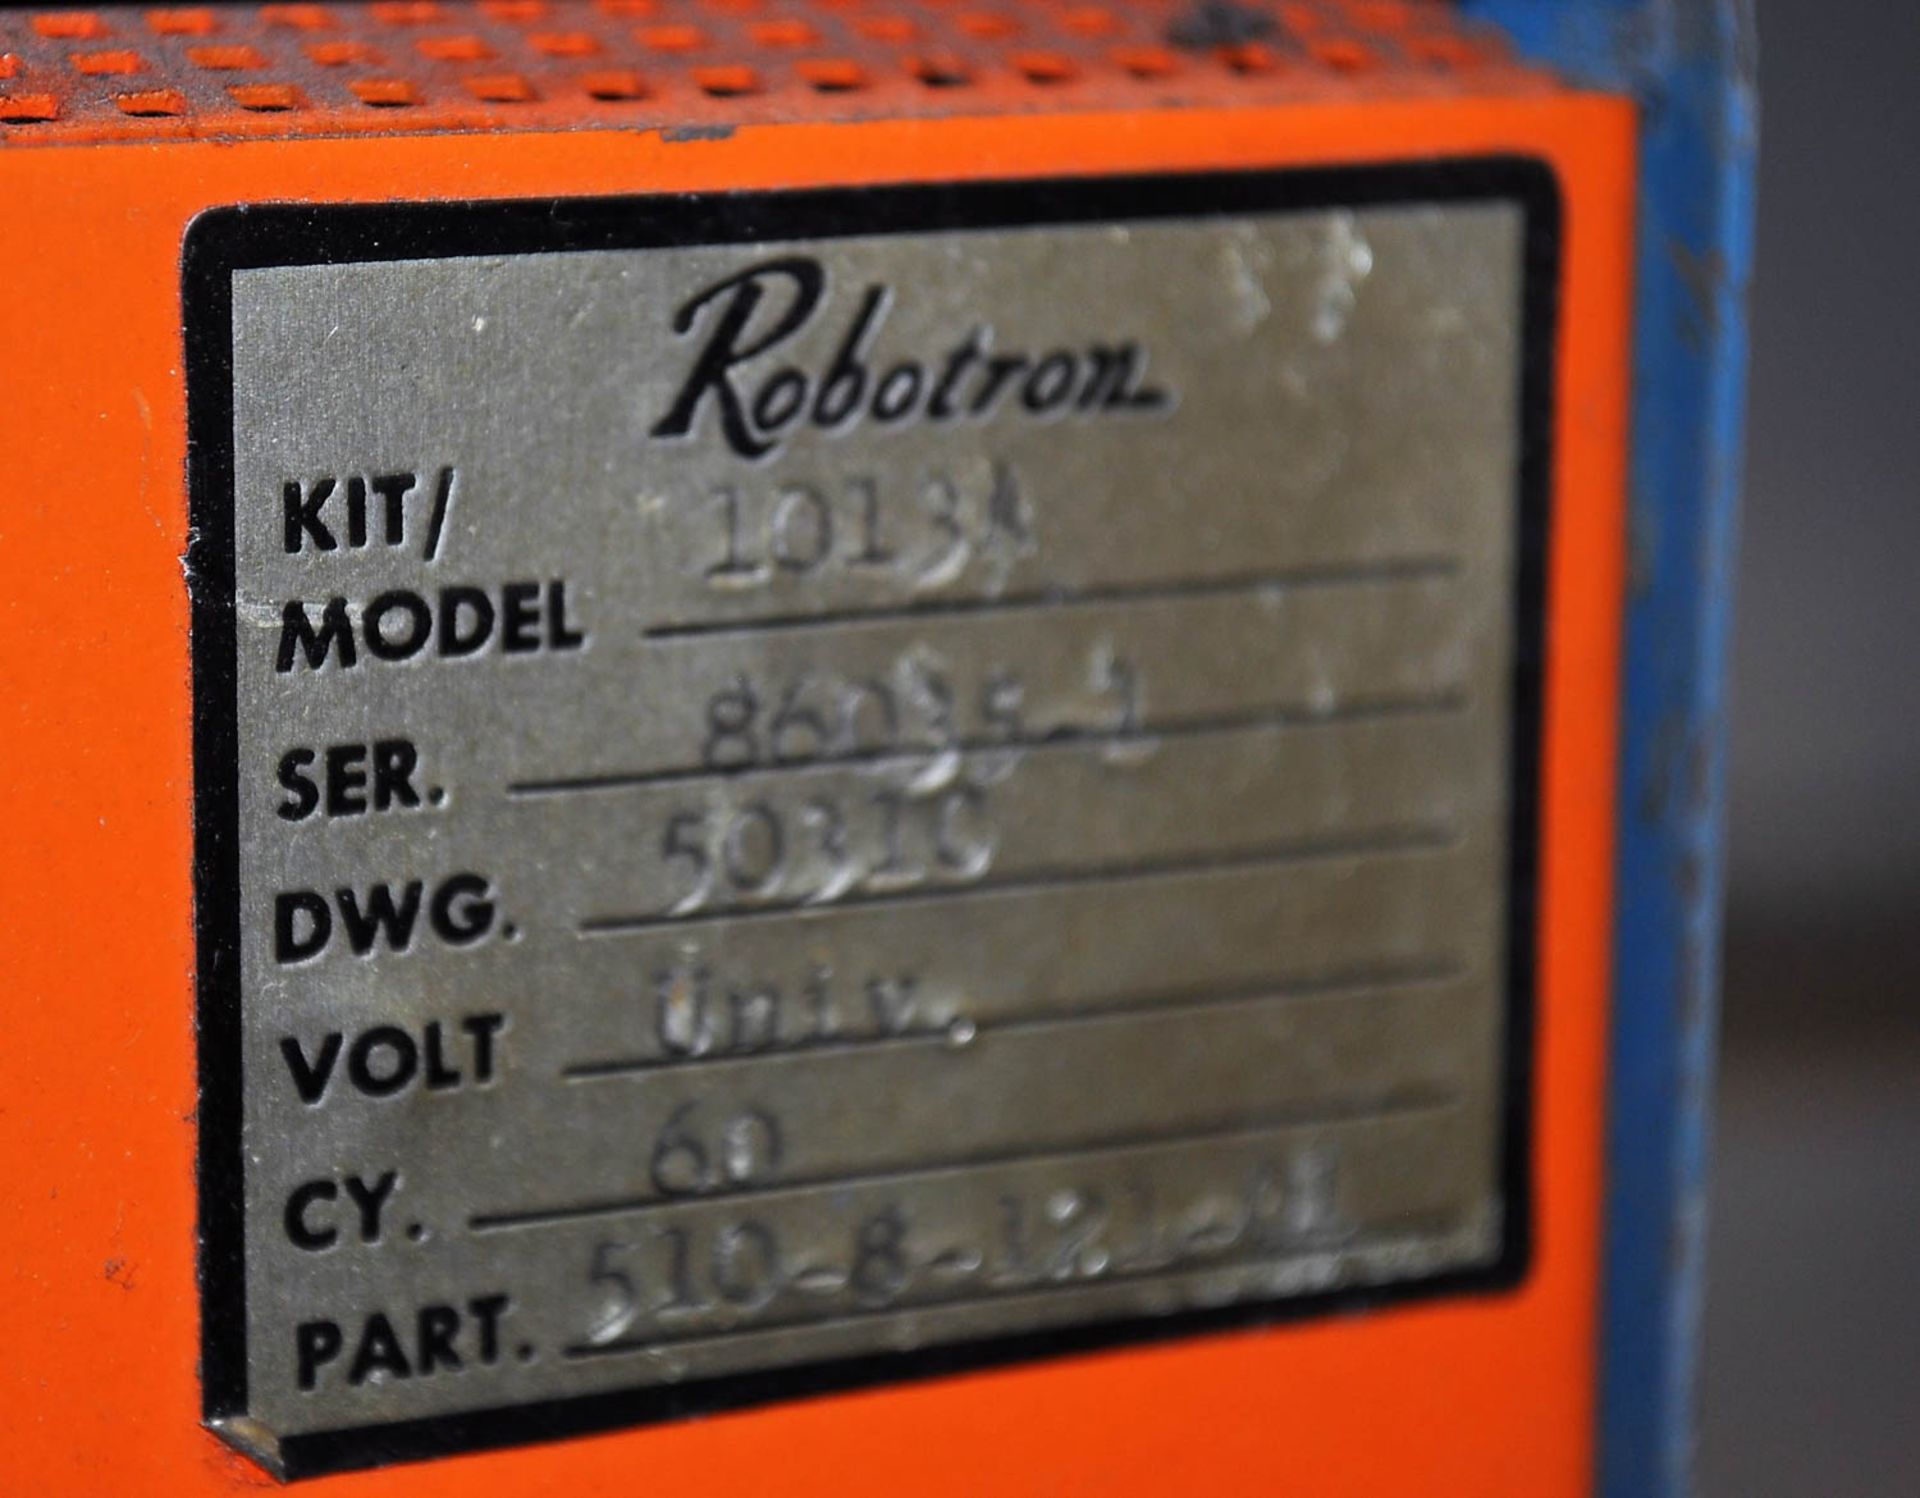 EISLER 15-AMP SPOT WELDER, WITH ROBOTRON 1013A CONTROL, S/N: 123806 [LOCATED IN ROANOKE, VA] - Image 3 of 4